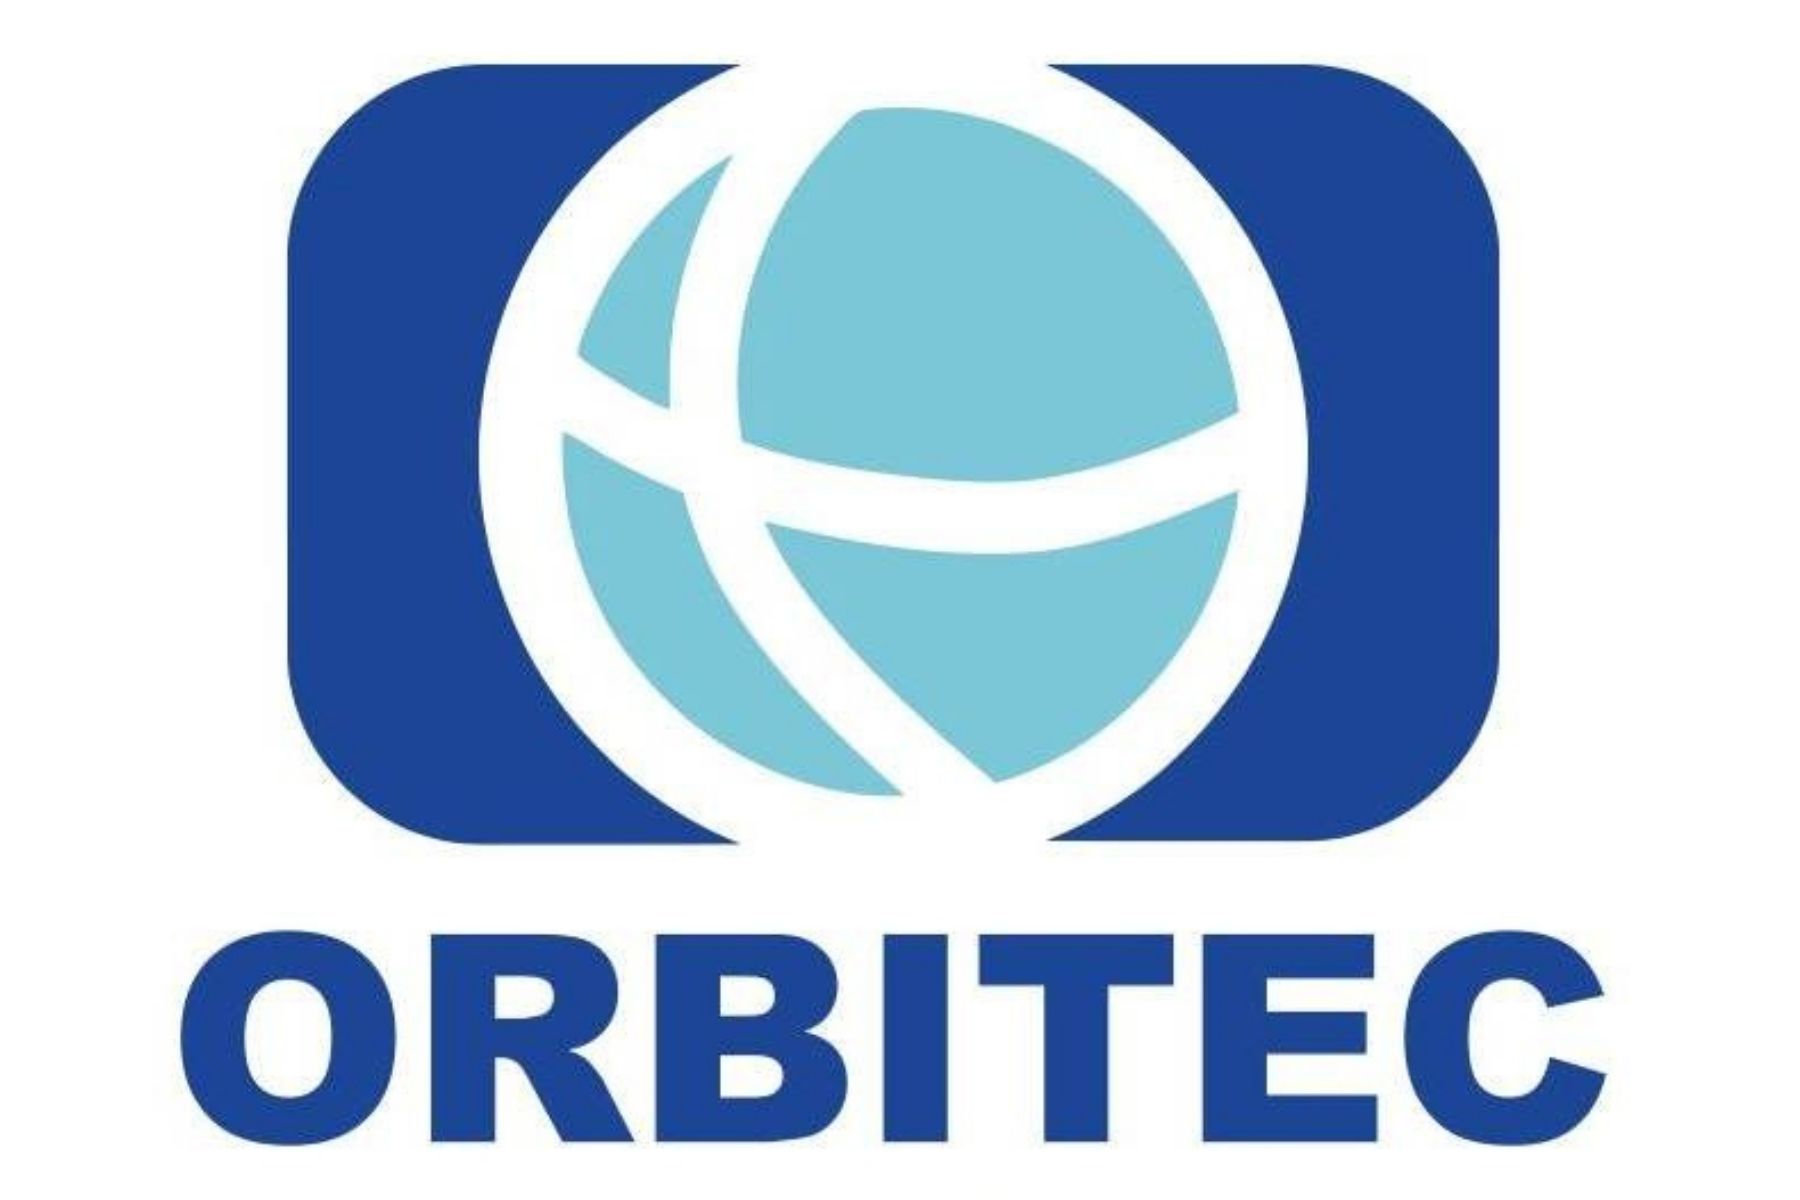 Orbitec logo